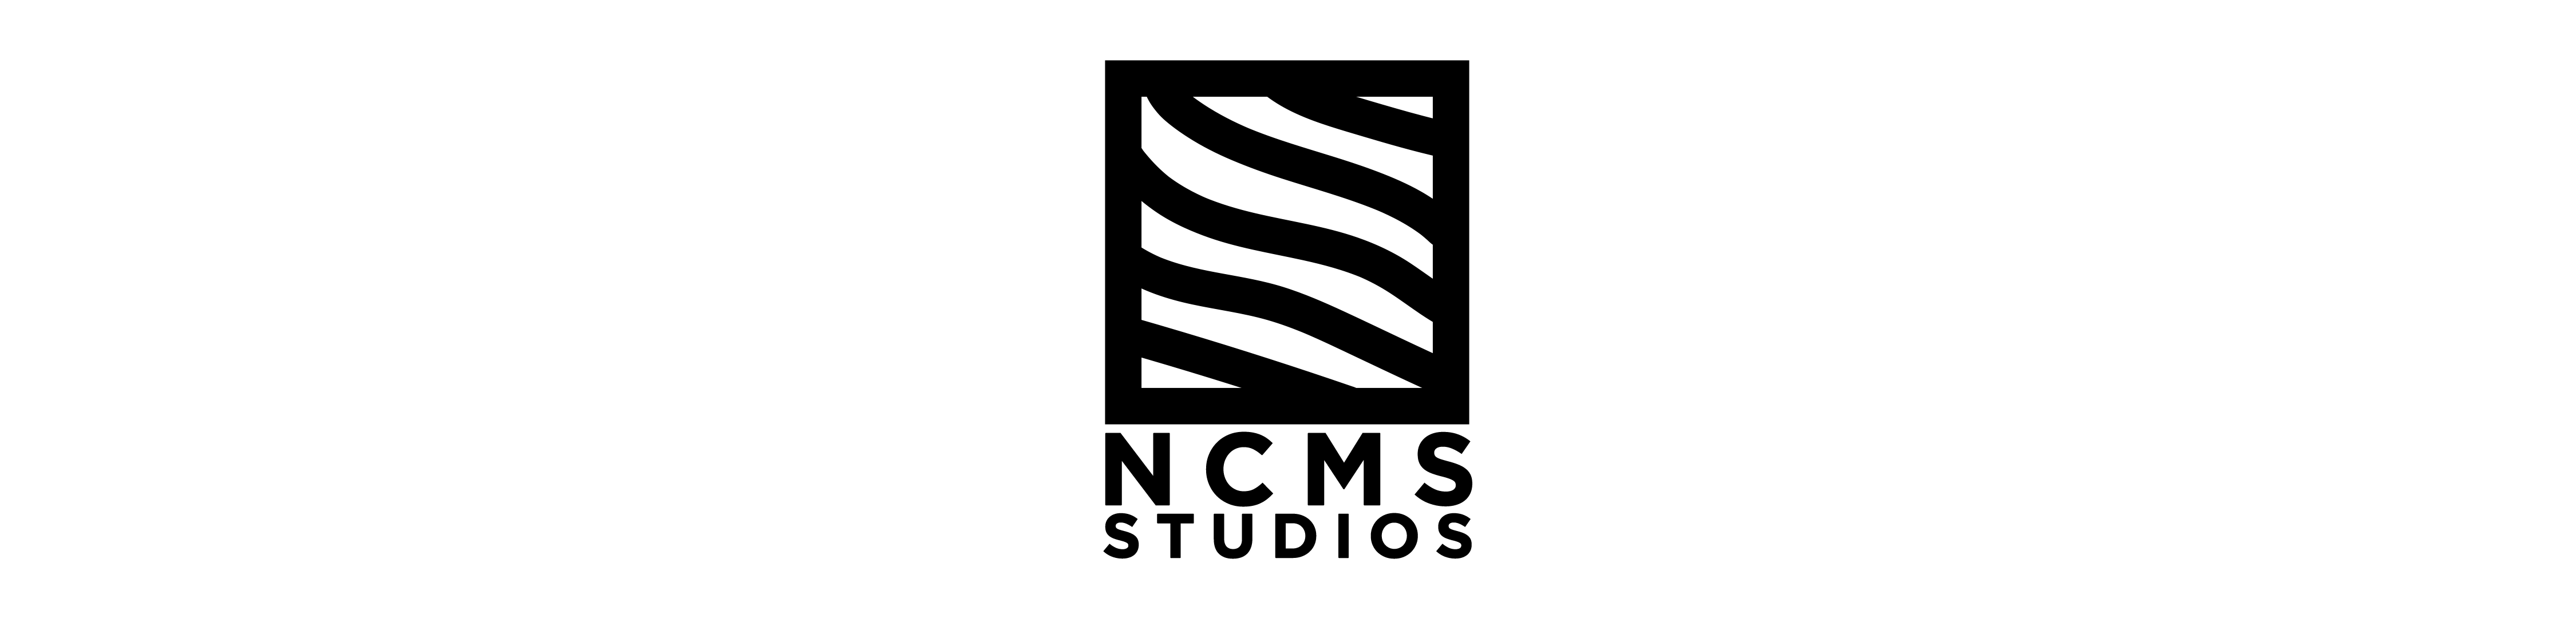 NCMS Logo